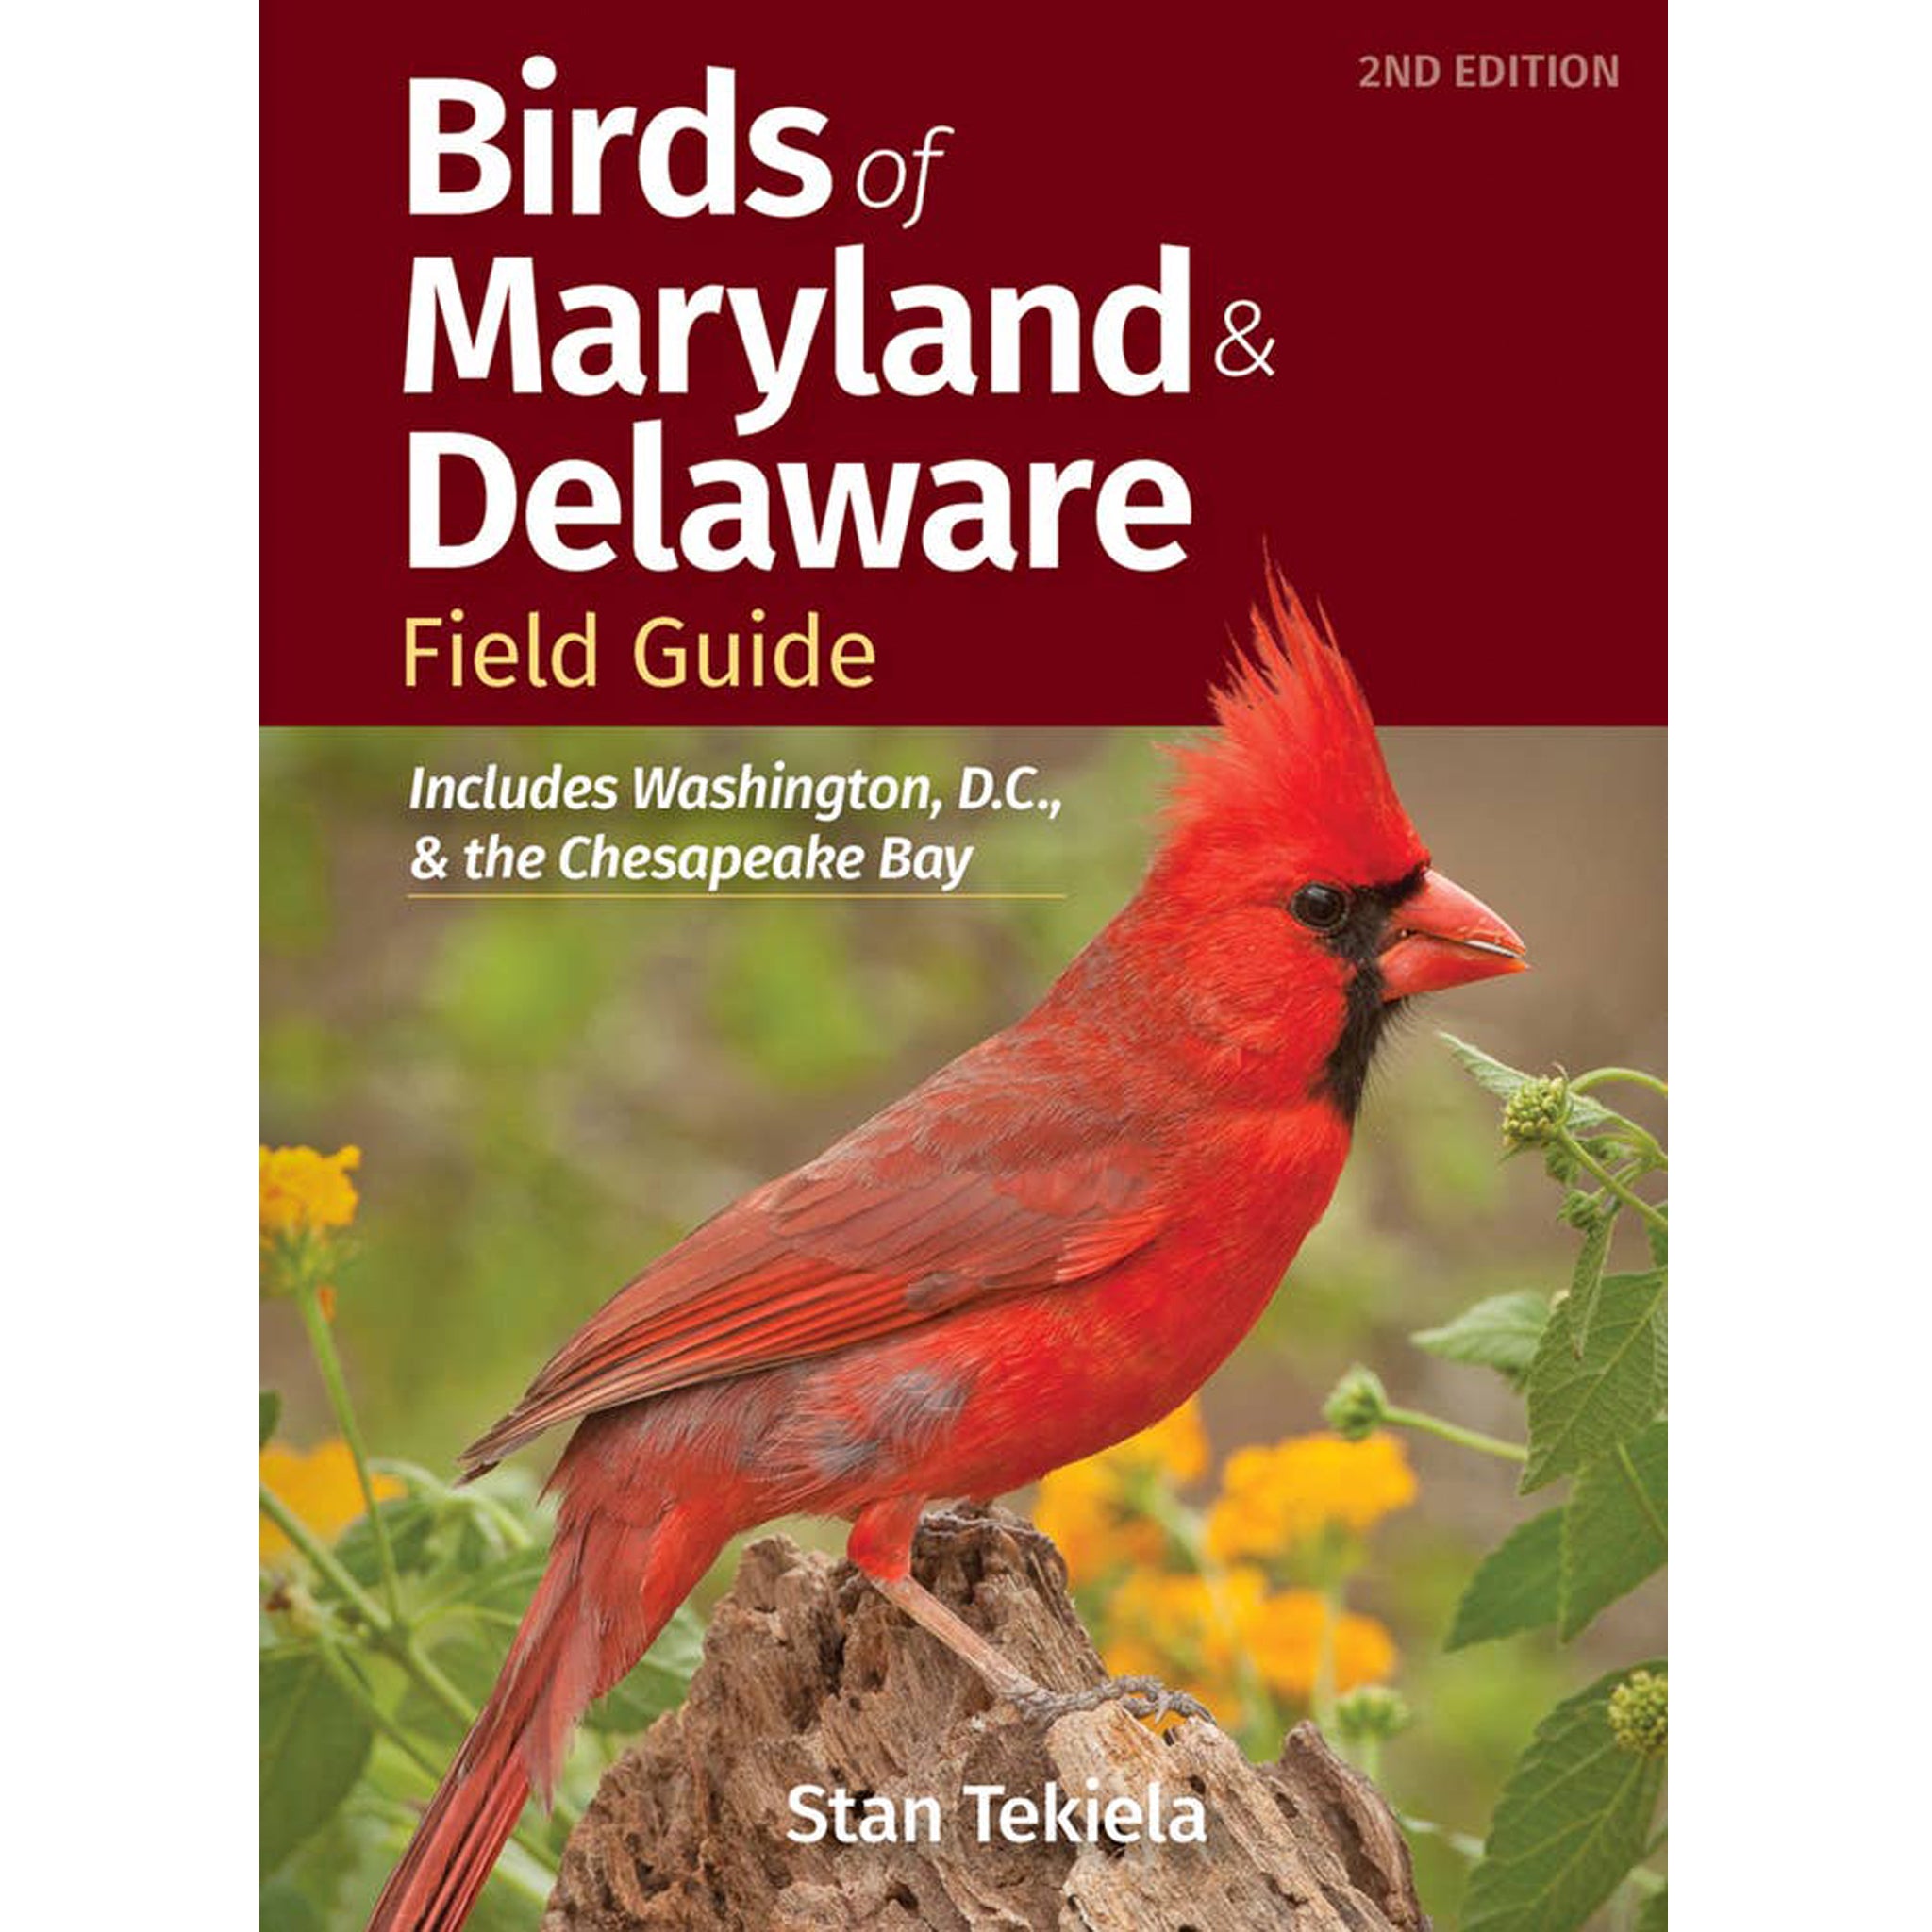 Washington State Birds (Pocket Naturalist® Guide)